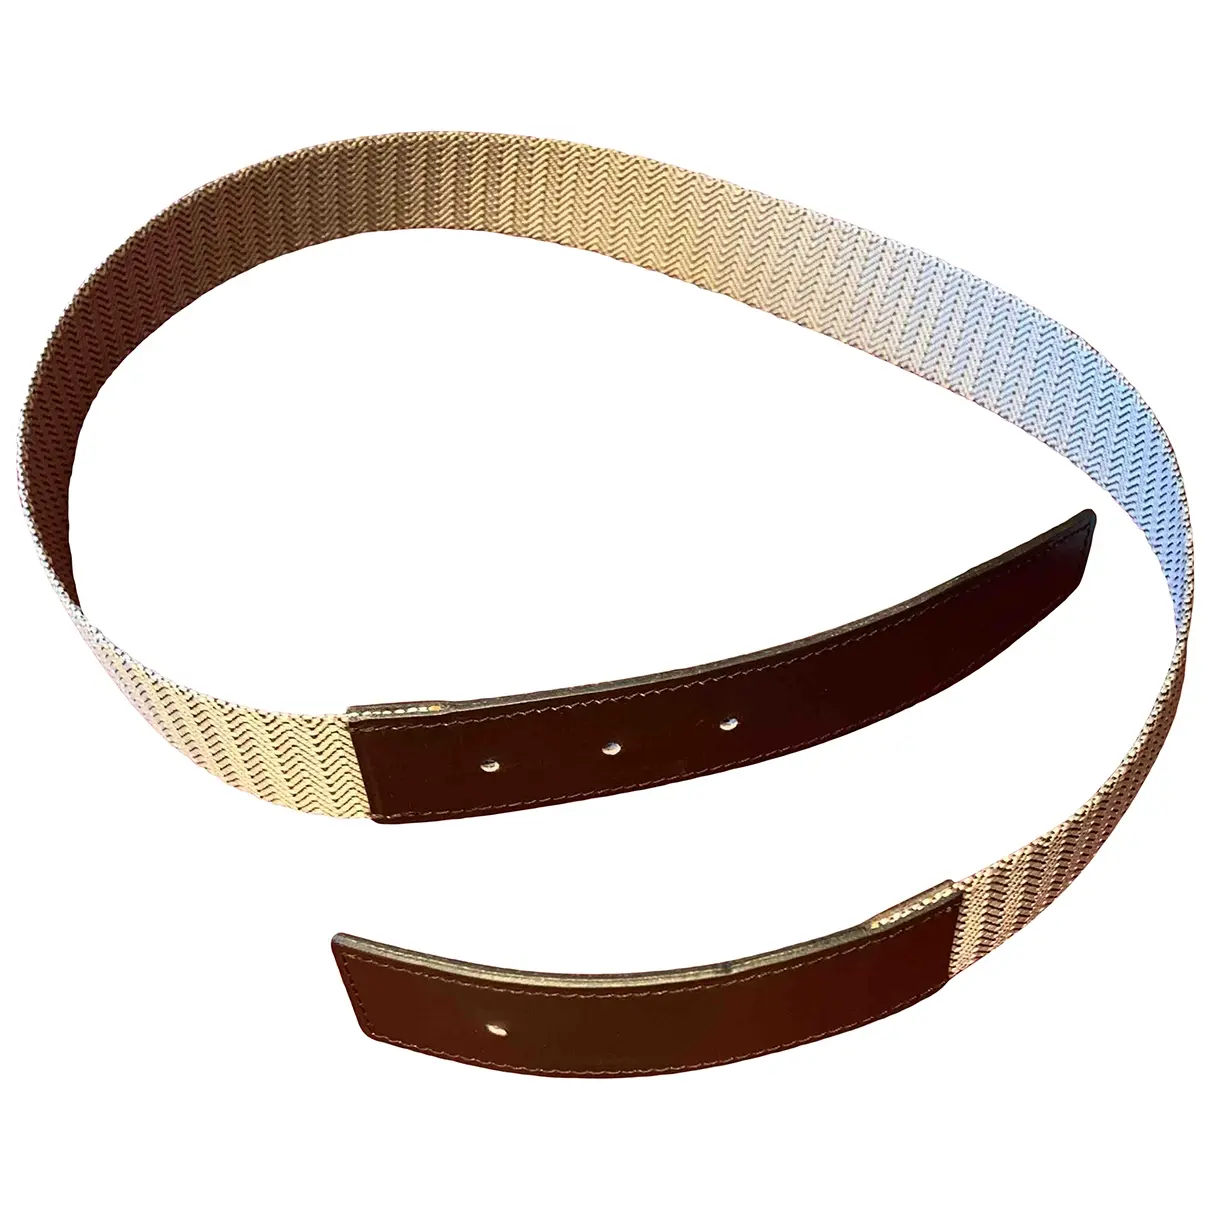 Cuir seul / Leather Strap cloth belt Hermès